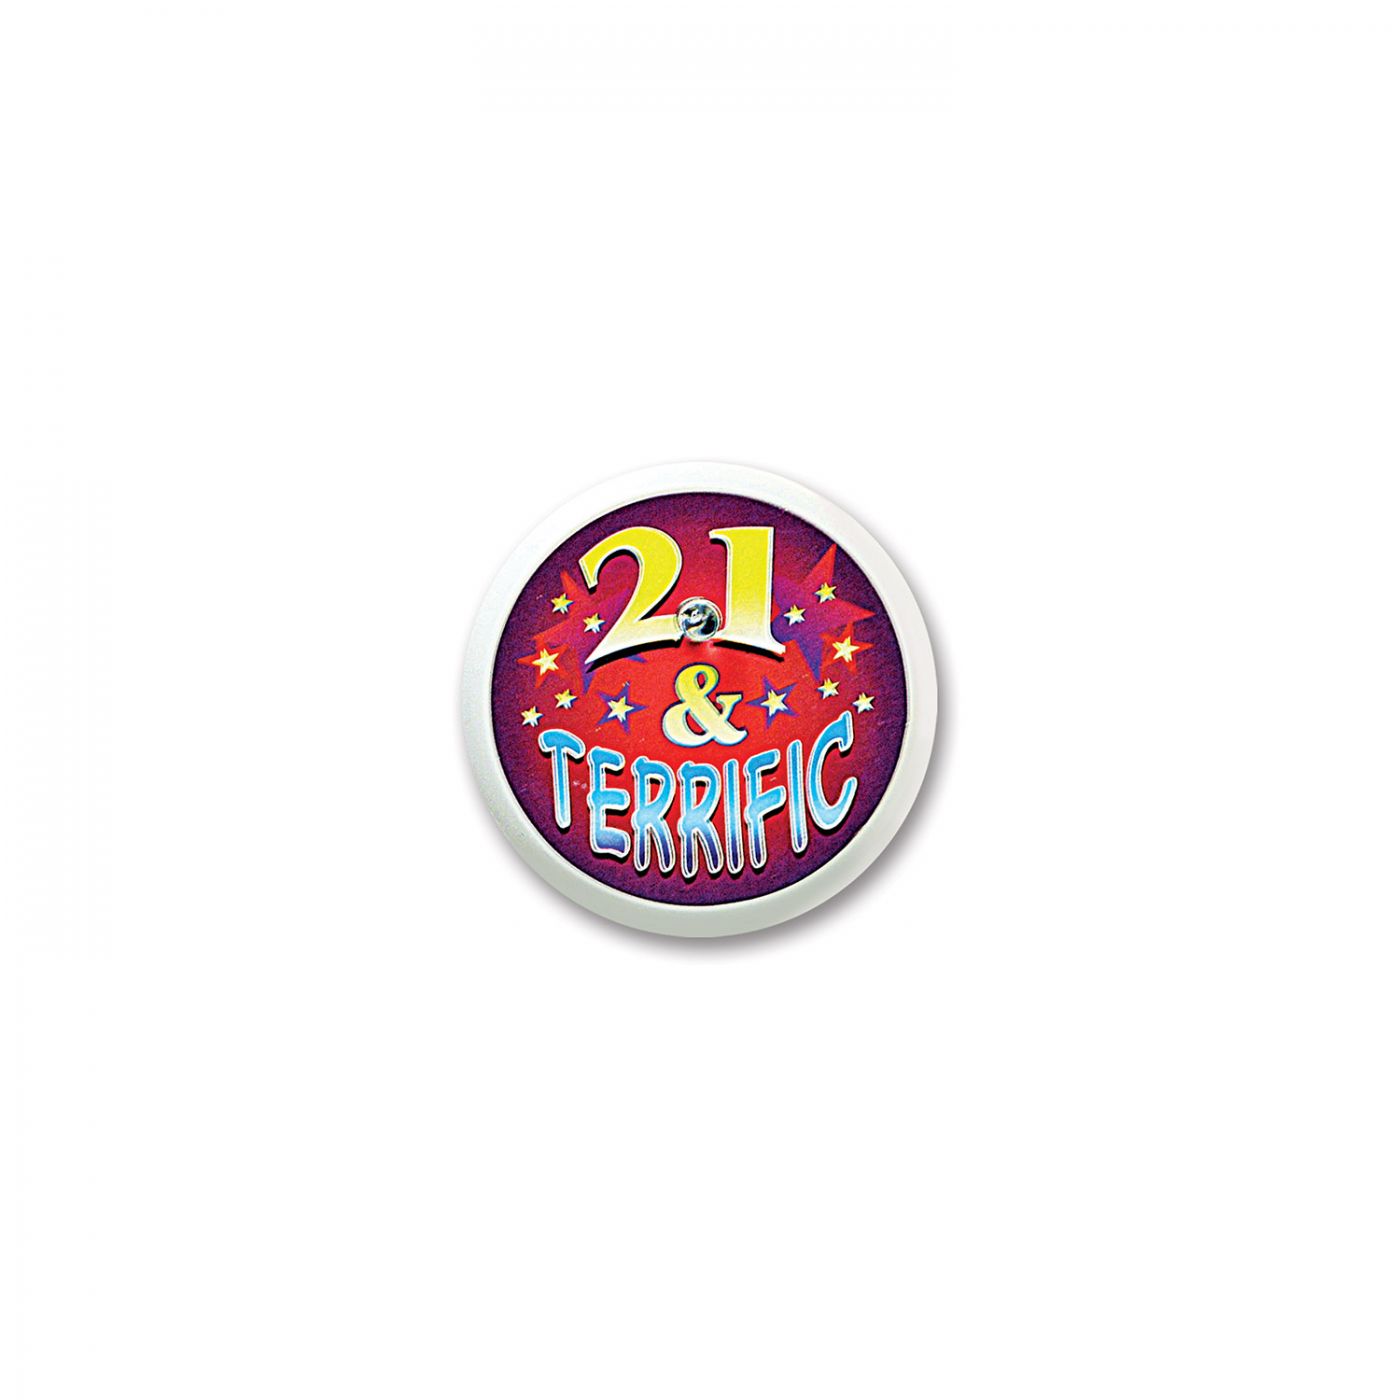 21 & Terrific Blinking Button (6) image